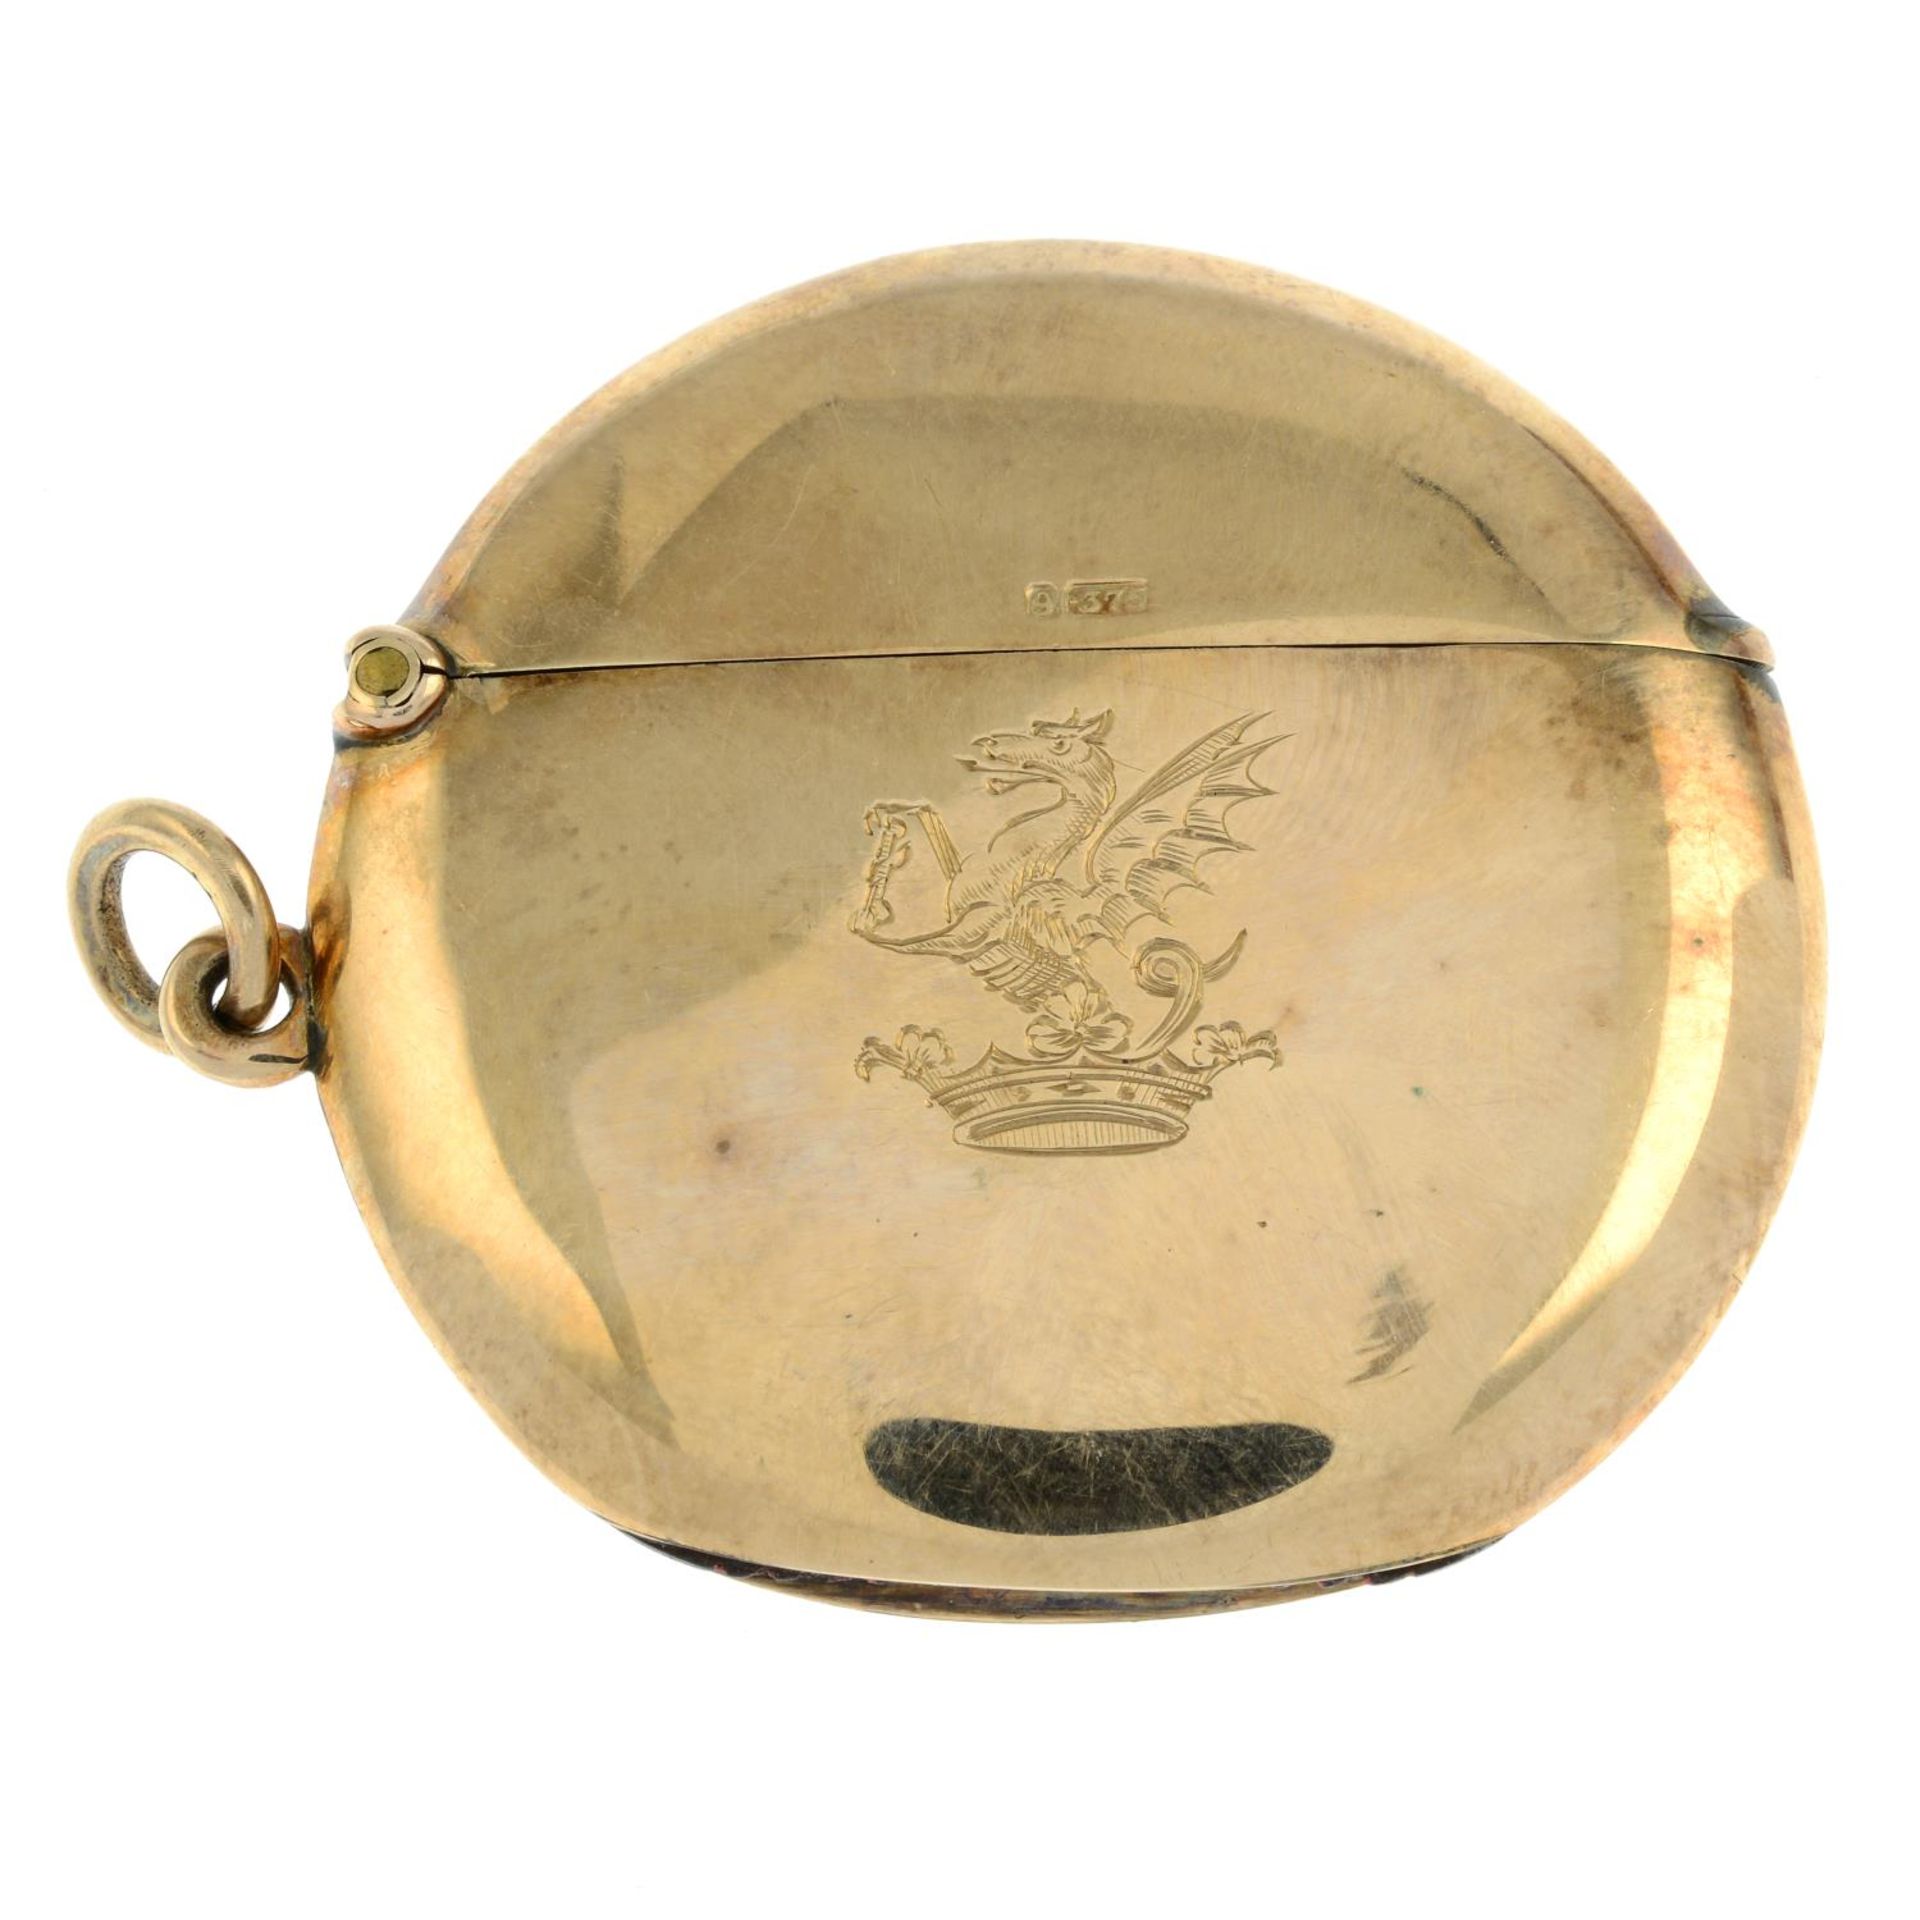 An Edwardian 9ct gold circular-shape vesta case, with engraved detail.